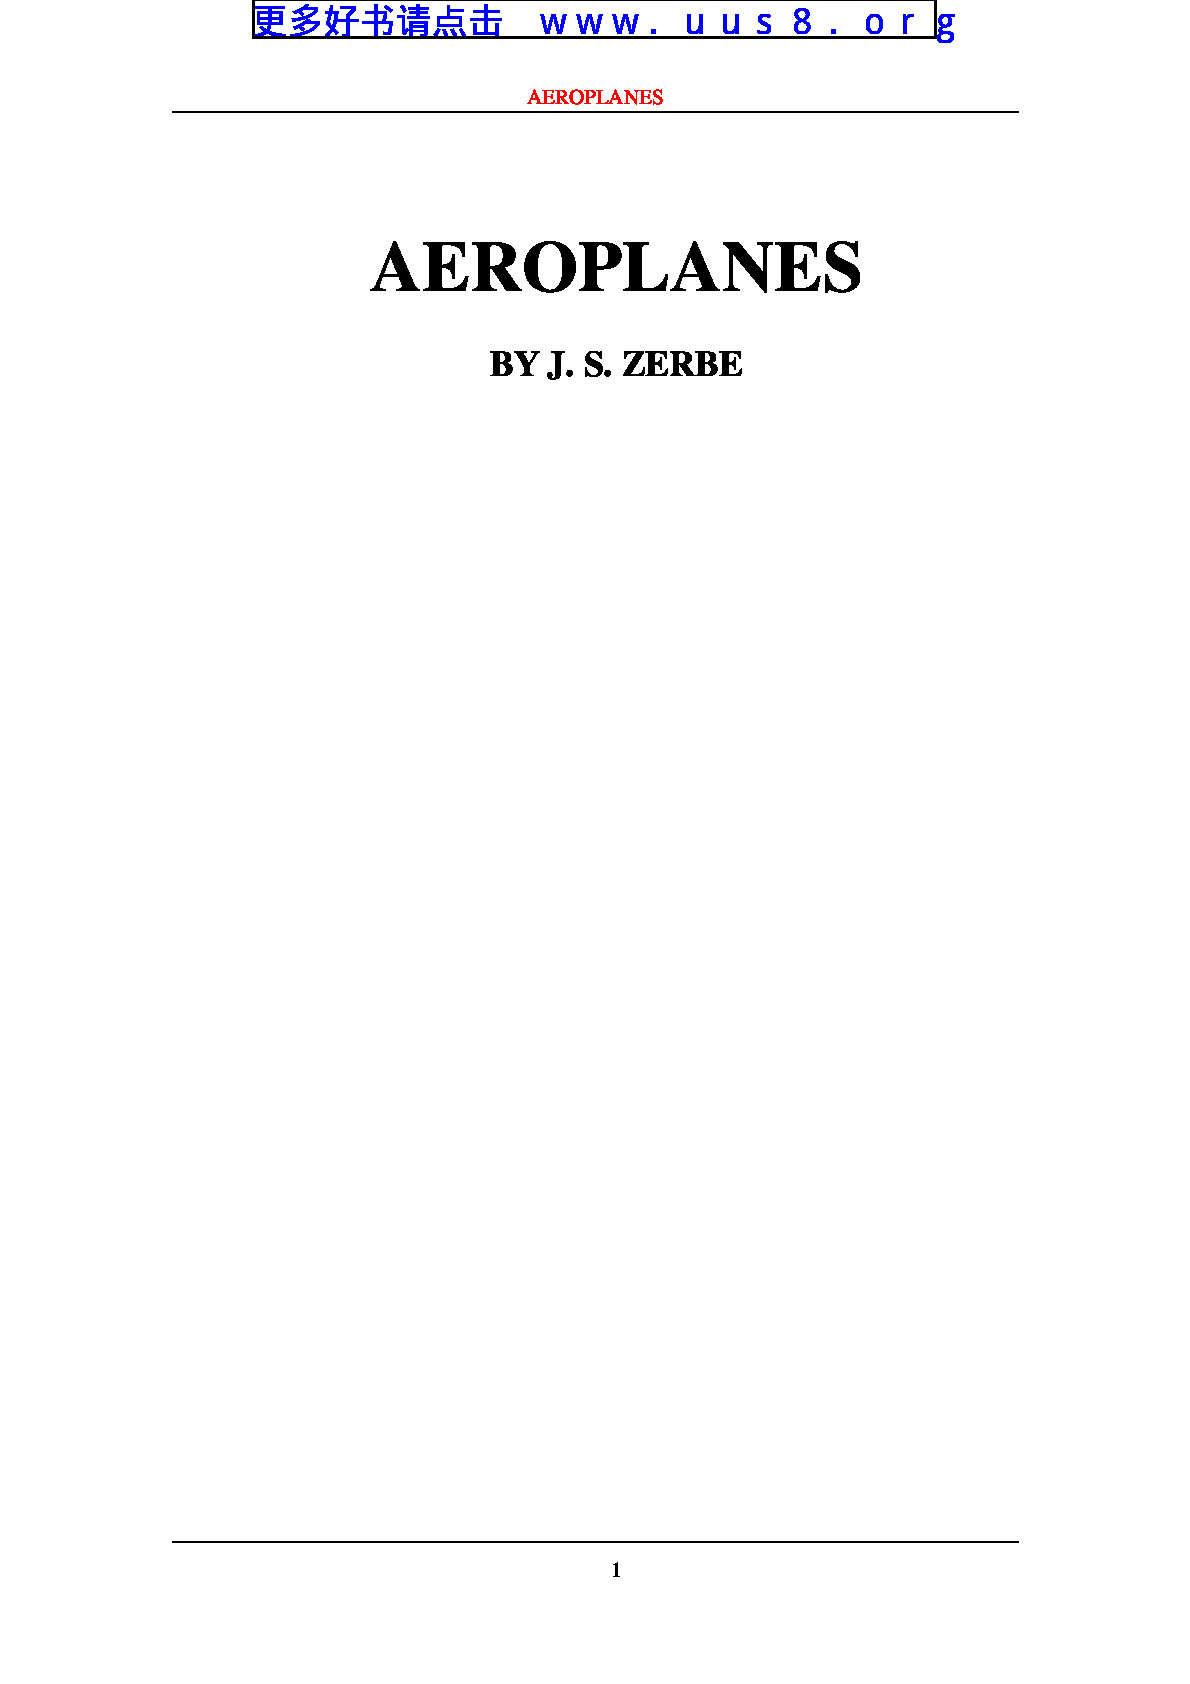 aeroplanes(飞机)